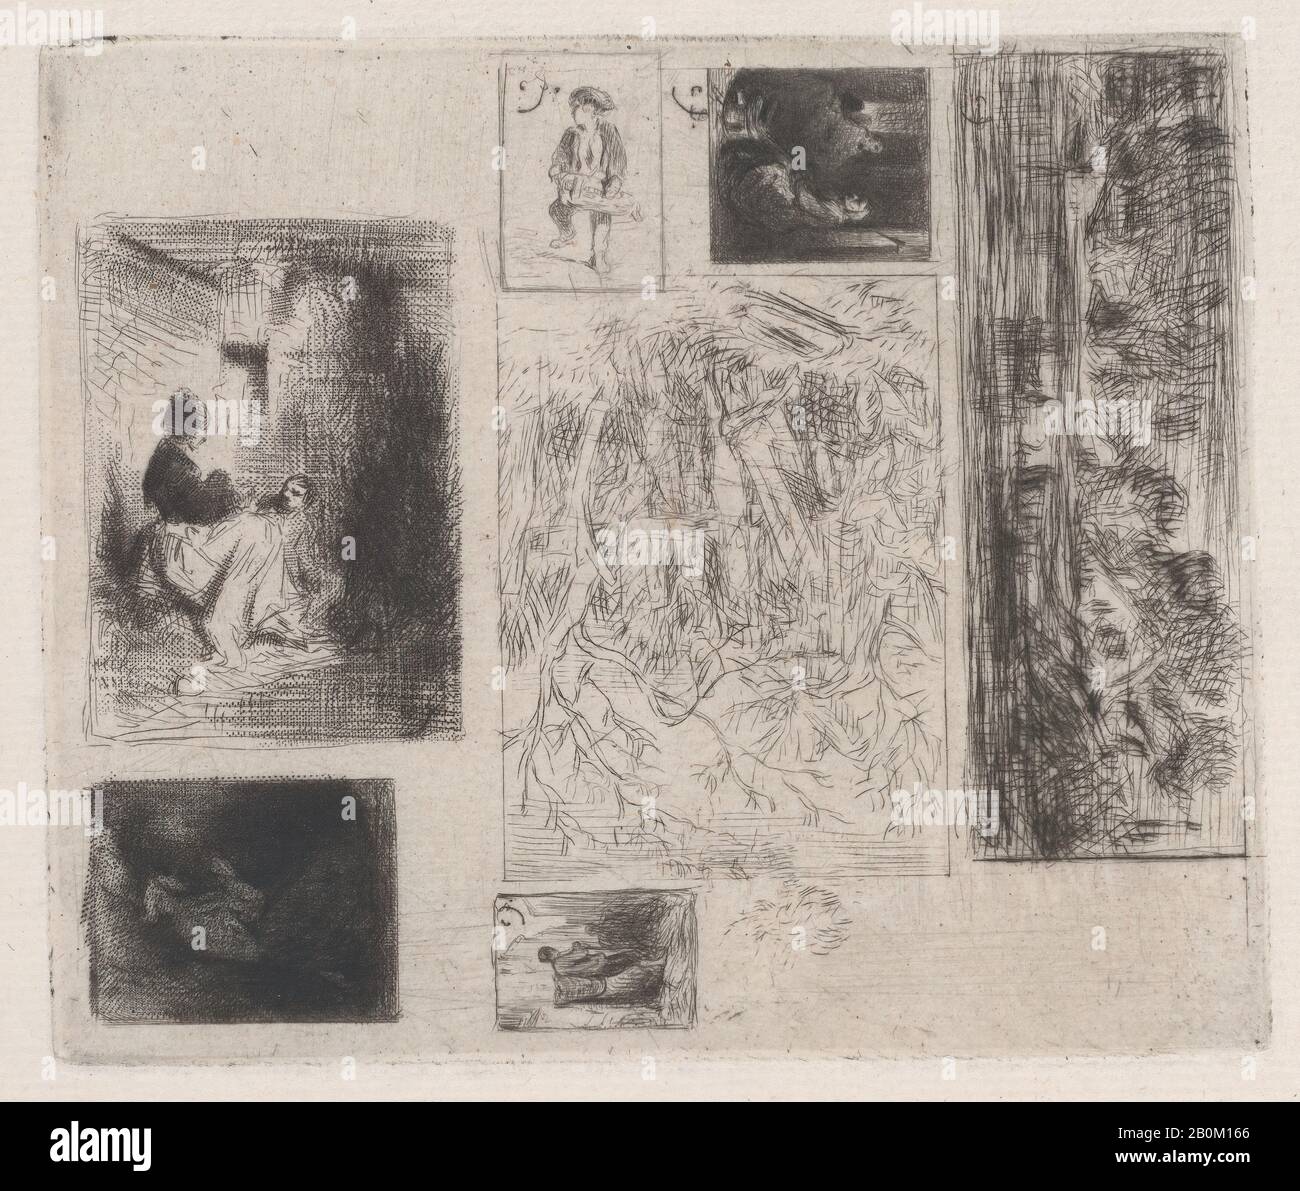 Charles Jacque, piatto composito: Donna e bambini (a), Old Musician (b), Frying Merchant (c), Landscape (d), Landscape (e), Praying Monk (f), and Scavenger (g), Charles Jacque (francese, Parigi 1813–1894 Parigi), 1843, Drypoint, foglio (Rifilato): 7 1/16 × 9 7/16 in. (18 × 24 cm), Piastra: 3 5/8 × 4 5/16 in. (9,3 × 11 cm), immagine (a): 1 7/8 × 1 3/8 in. (4,8 × 3,5 cm), immagine (b): 13/16 × 9/16 in. (2 × 1,5 cm), immagine (c): 13/16 × 11/16 in. (2 × 1,8 cm), immagine (d): 1" × 2 3/4 poll. (2,5 × 7 cm), immagine (e): 1 9/16 × 1 15/16 in. (4 × 5 cm), immagine (f): 1 1/16 × 7/8 in. (2,8 × 2,3 cm), immagine (g): 1/2 × 11/ Foto Stock